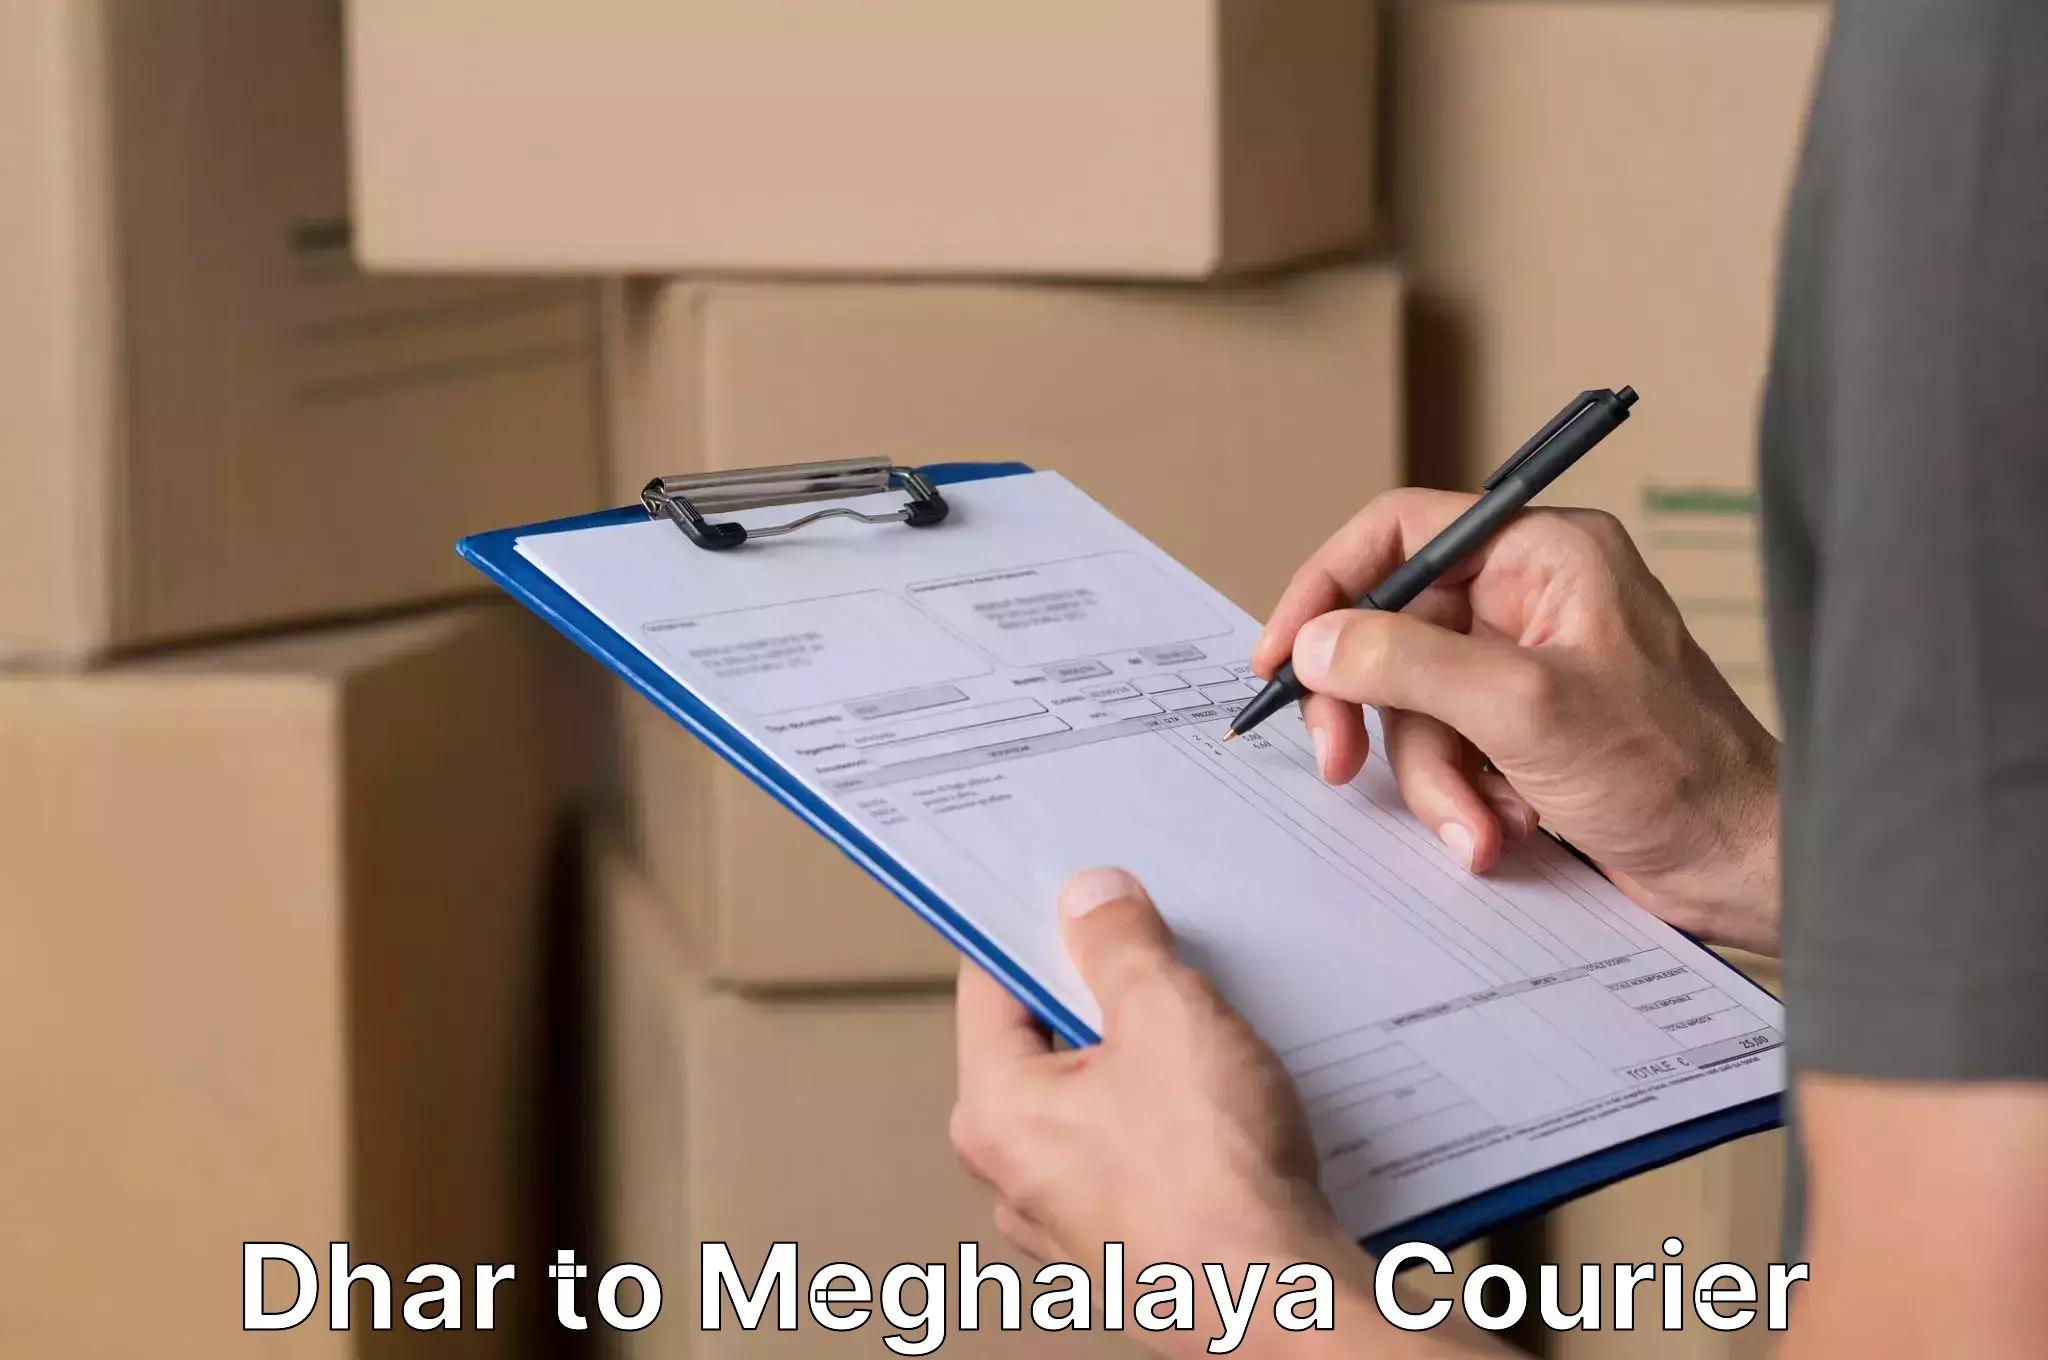 Home shifting experts Dhar to Meghalaya